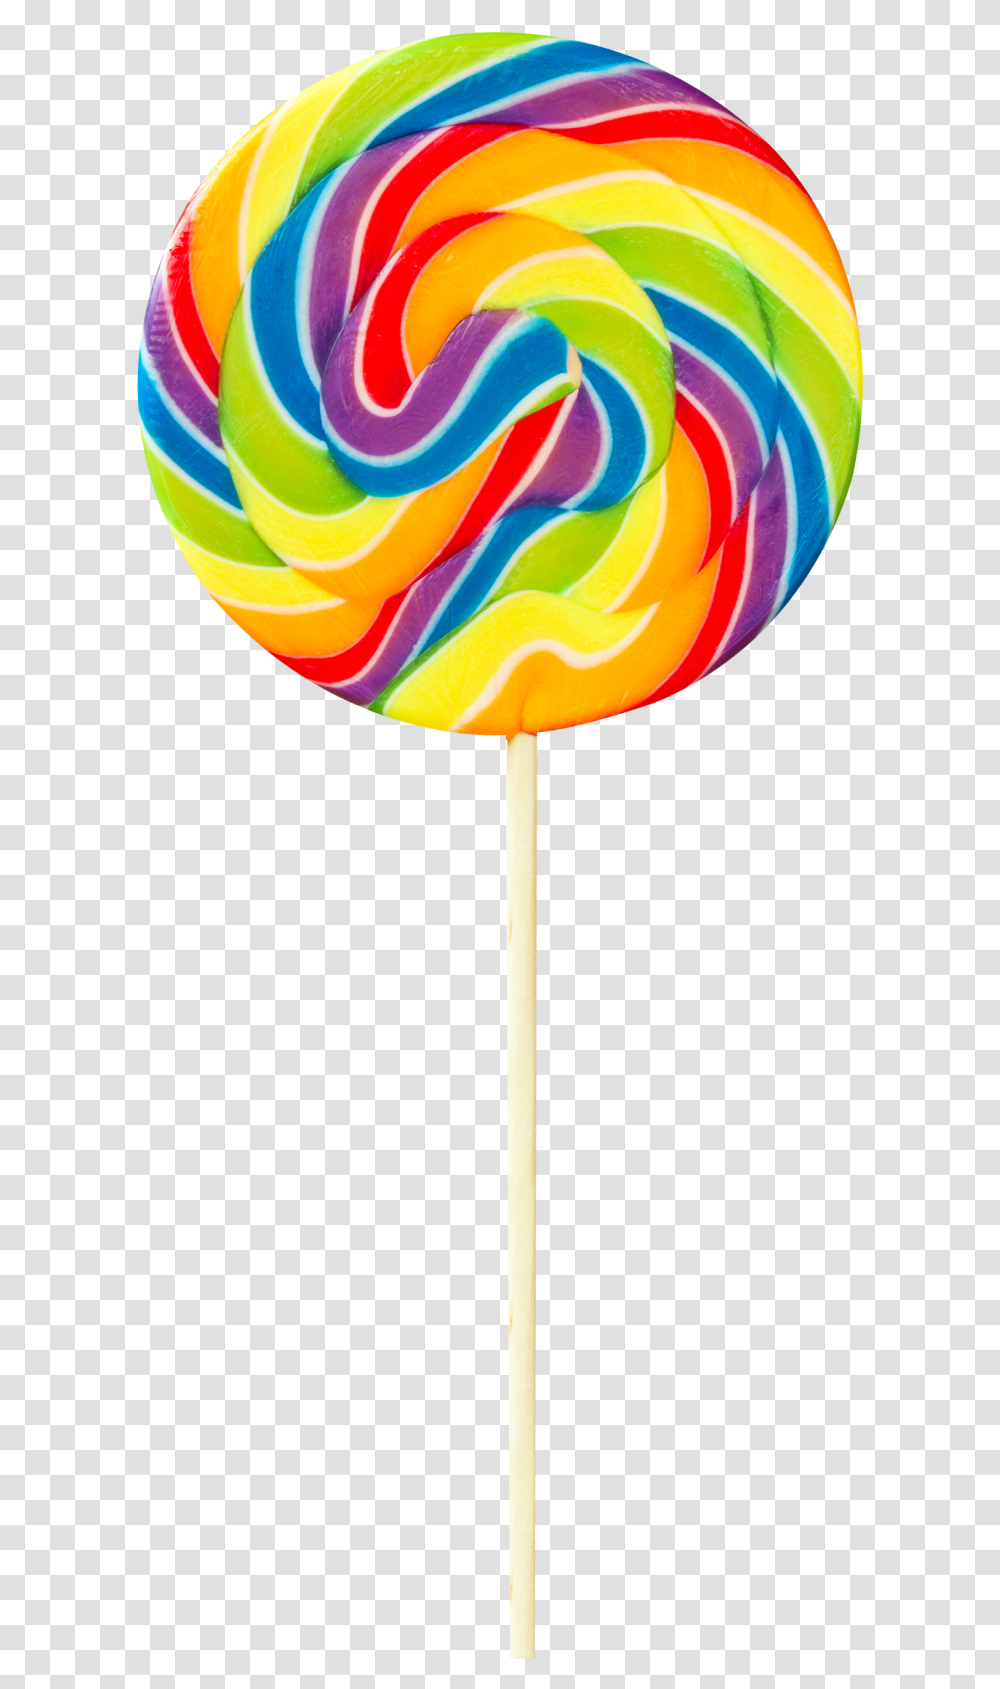 Swirl Lollipop Image Background Lollipop, Lamp, Food, Candy, Balloon Transparent Png